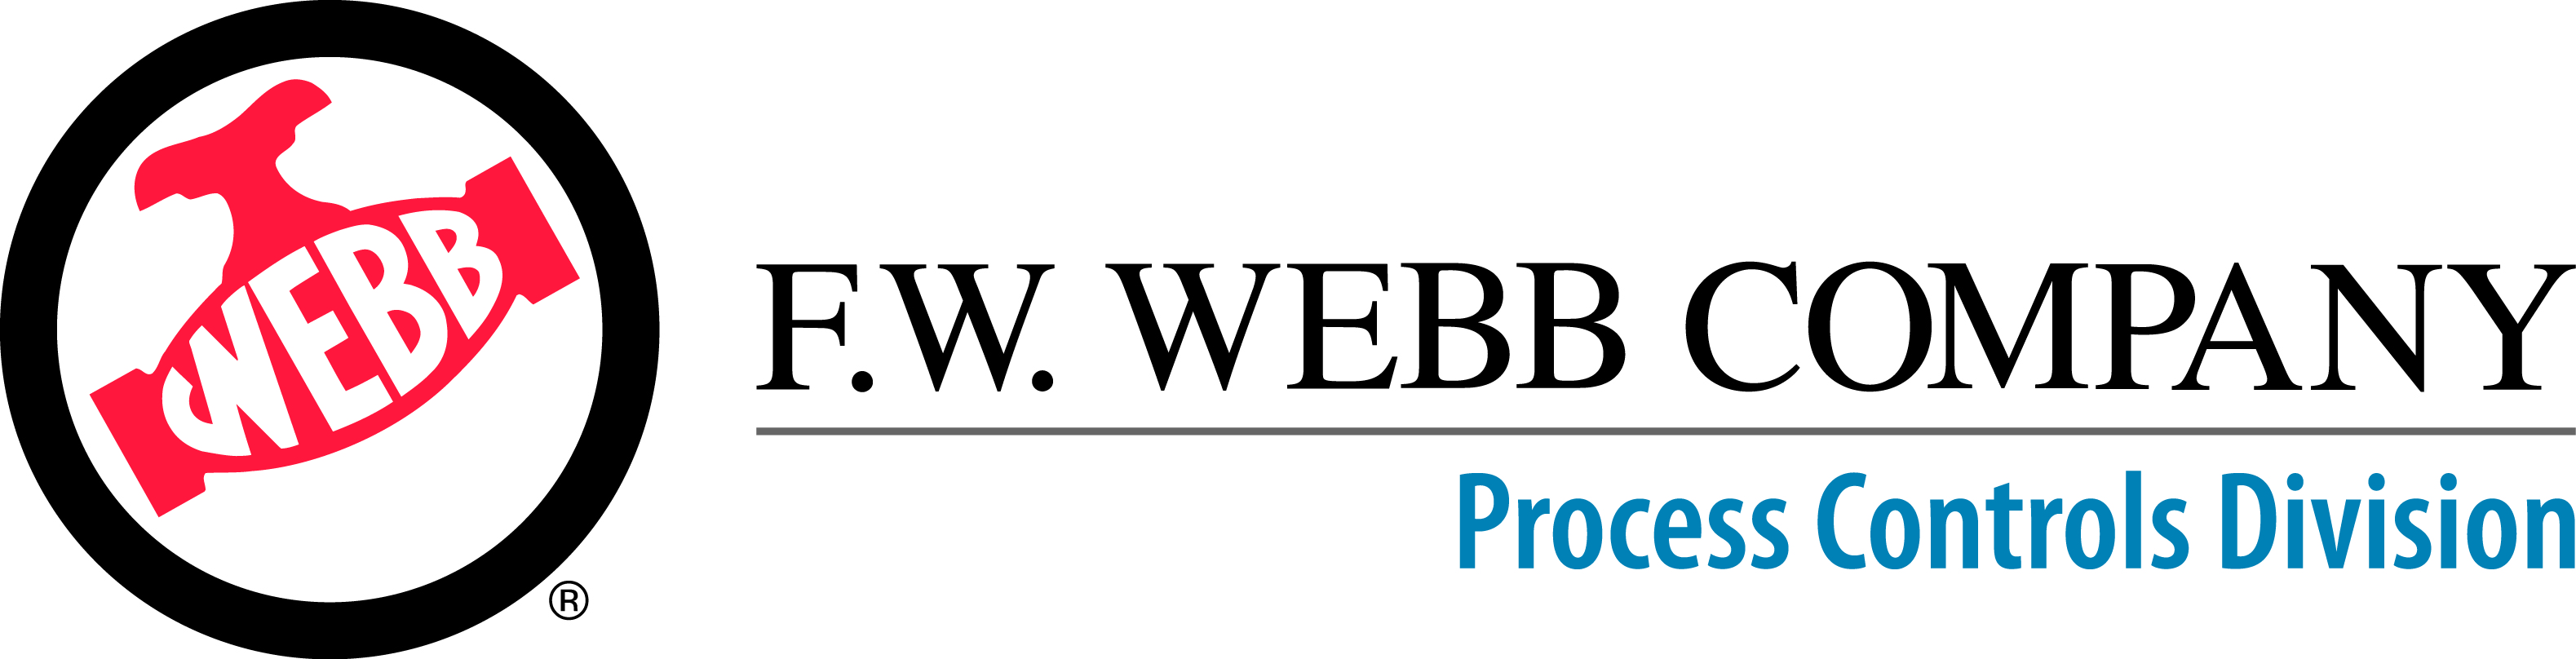 FW Webb Company Process Controls Division Logo